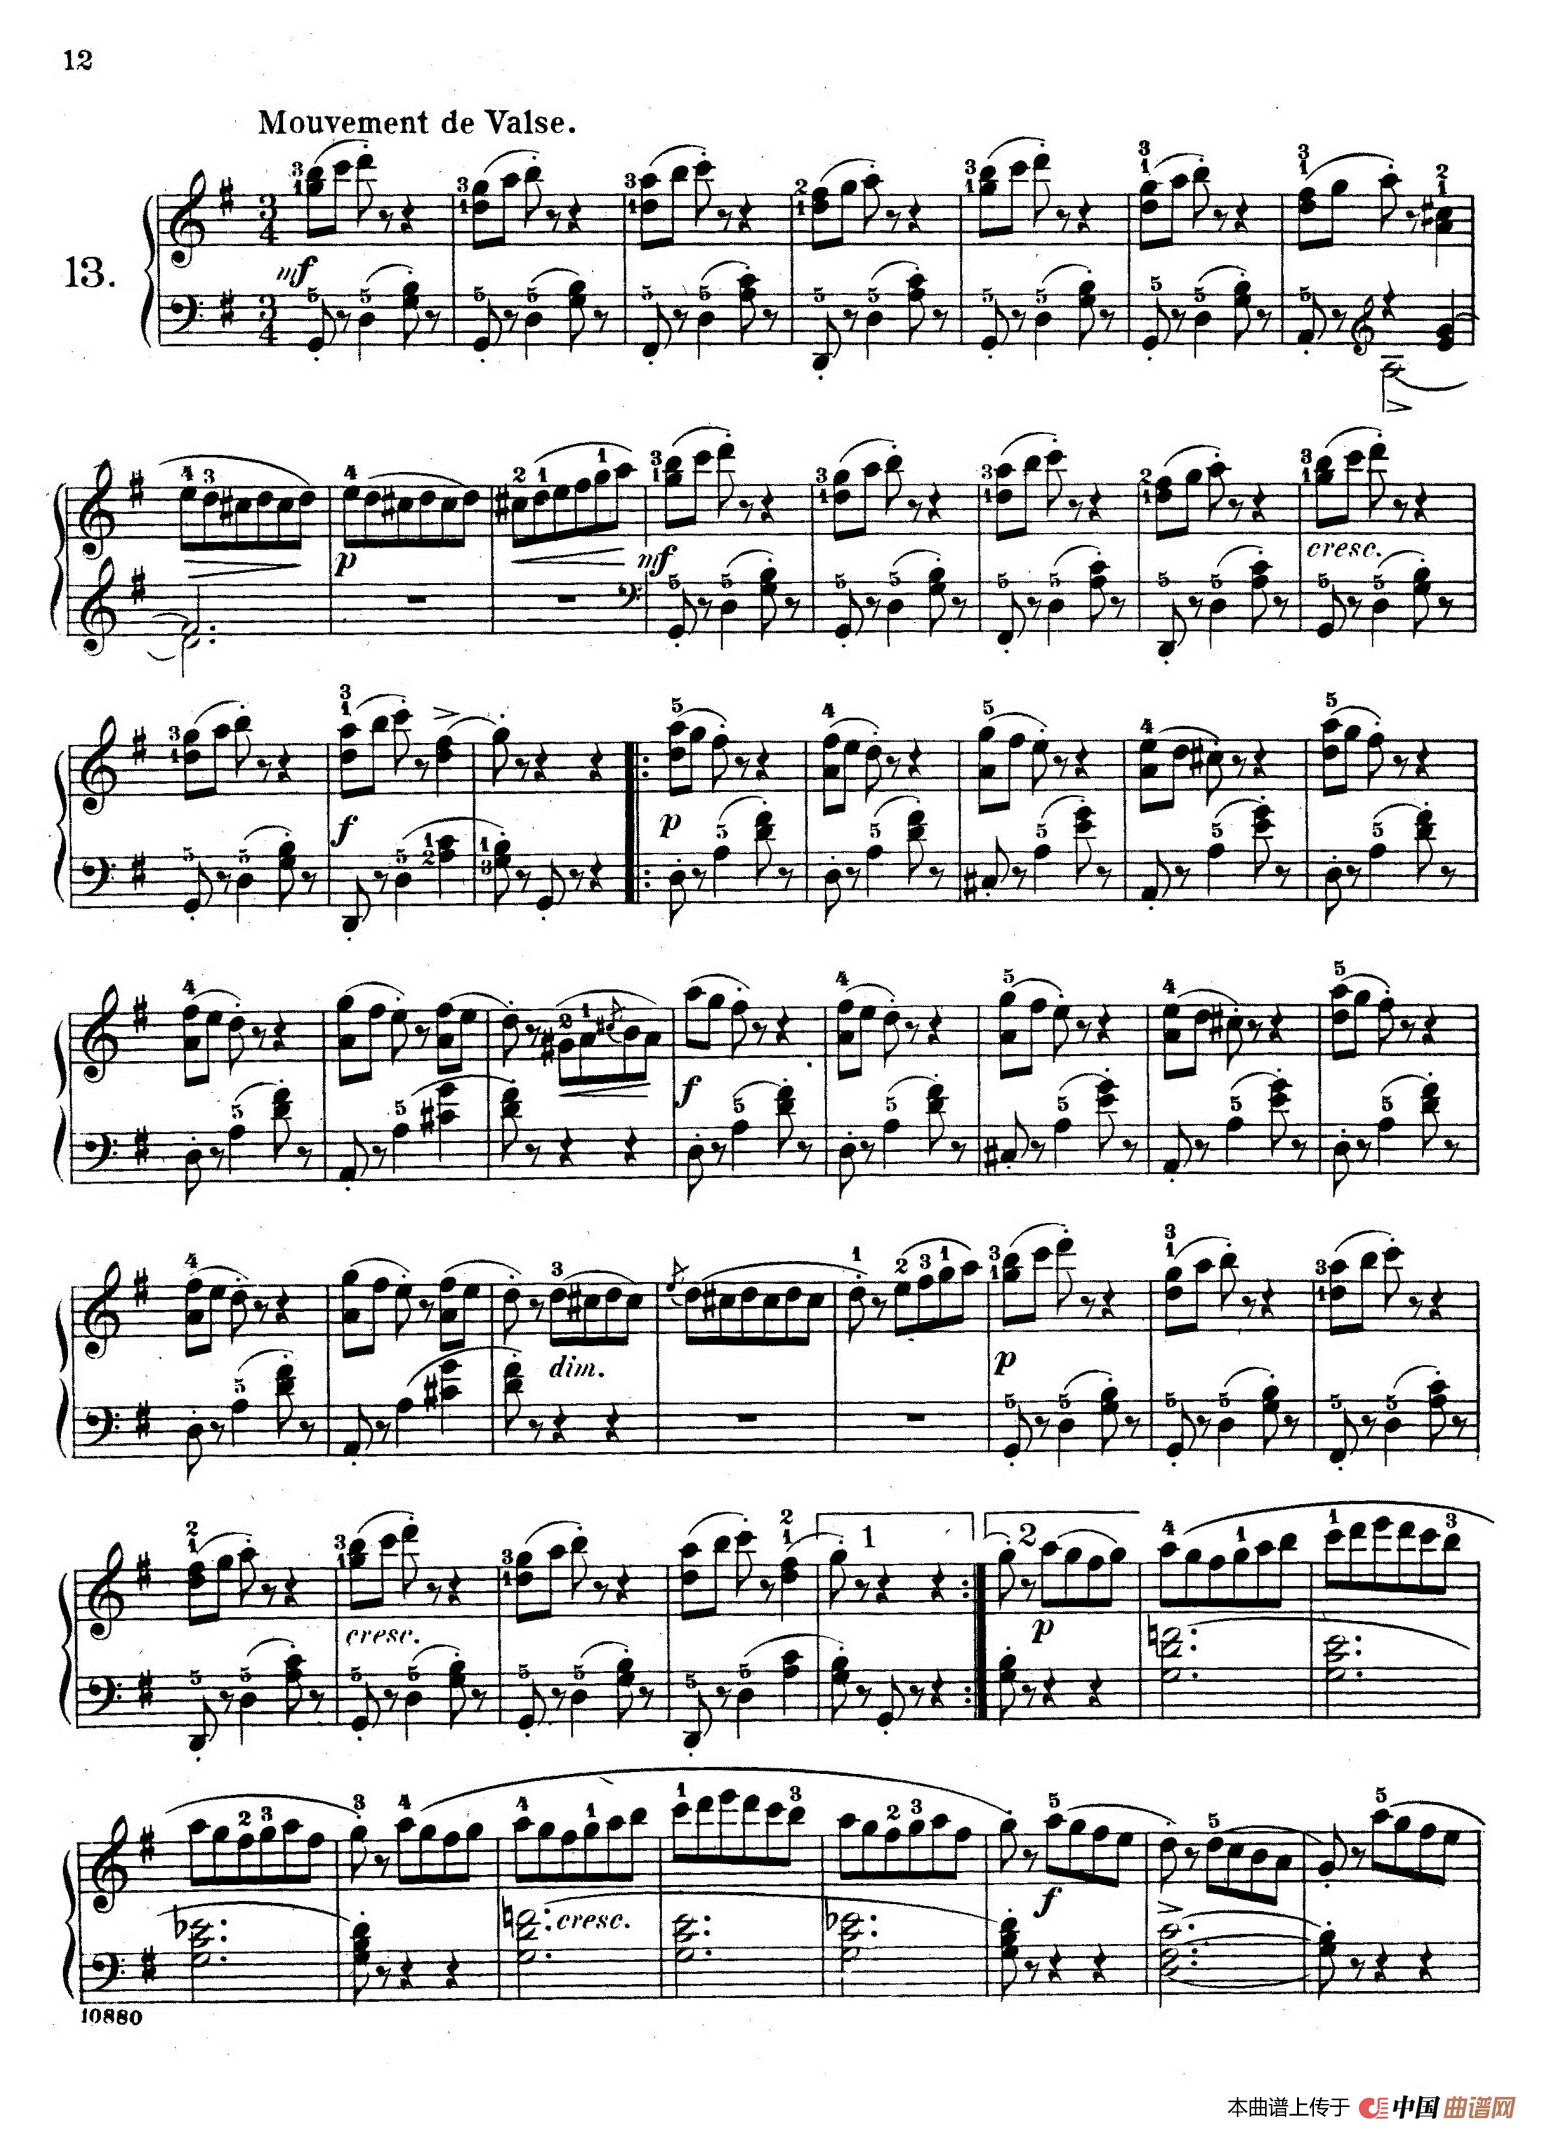 Etudes Enfantines Op.37（儿童钢琴练习曲 第11——14首